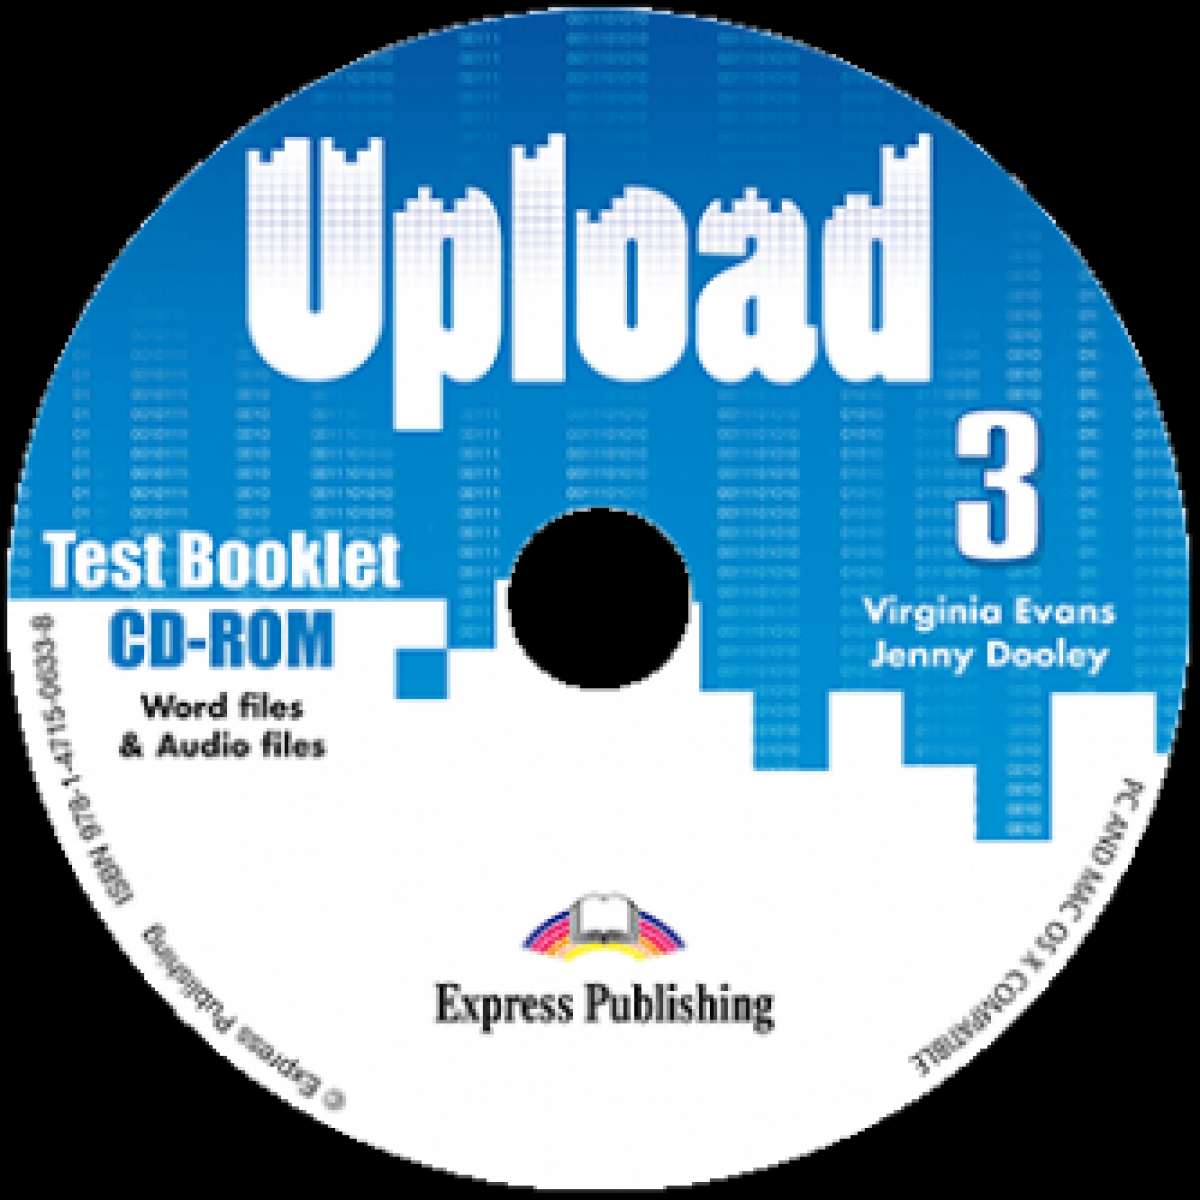 Friends 3 test book. Upload 2. Test booklet CD-ROM. Upload 3 Test booklet CD-ROM. Au pair Audio CDS. CD booklet.